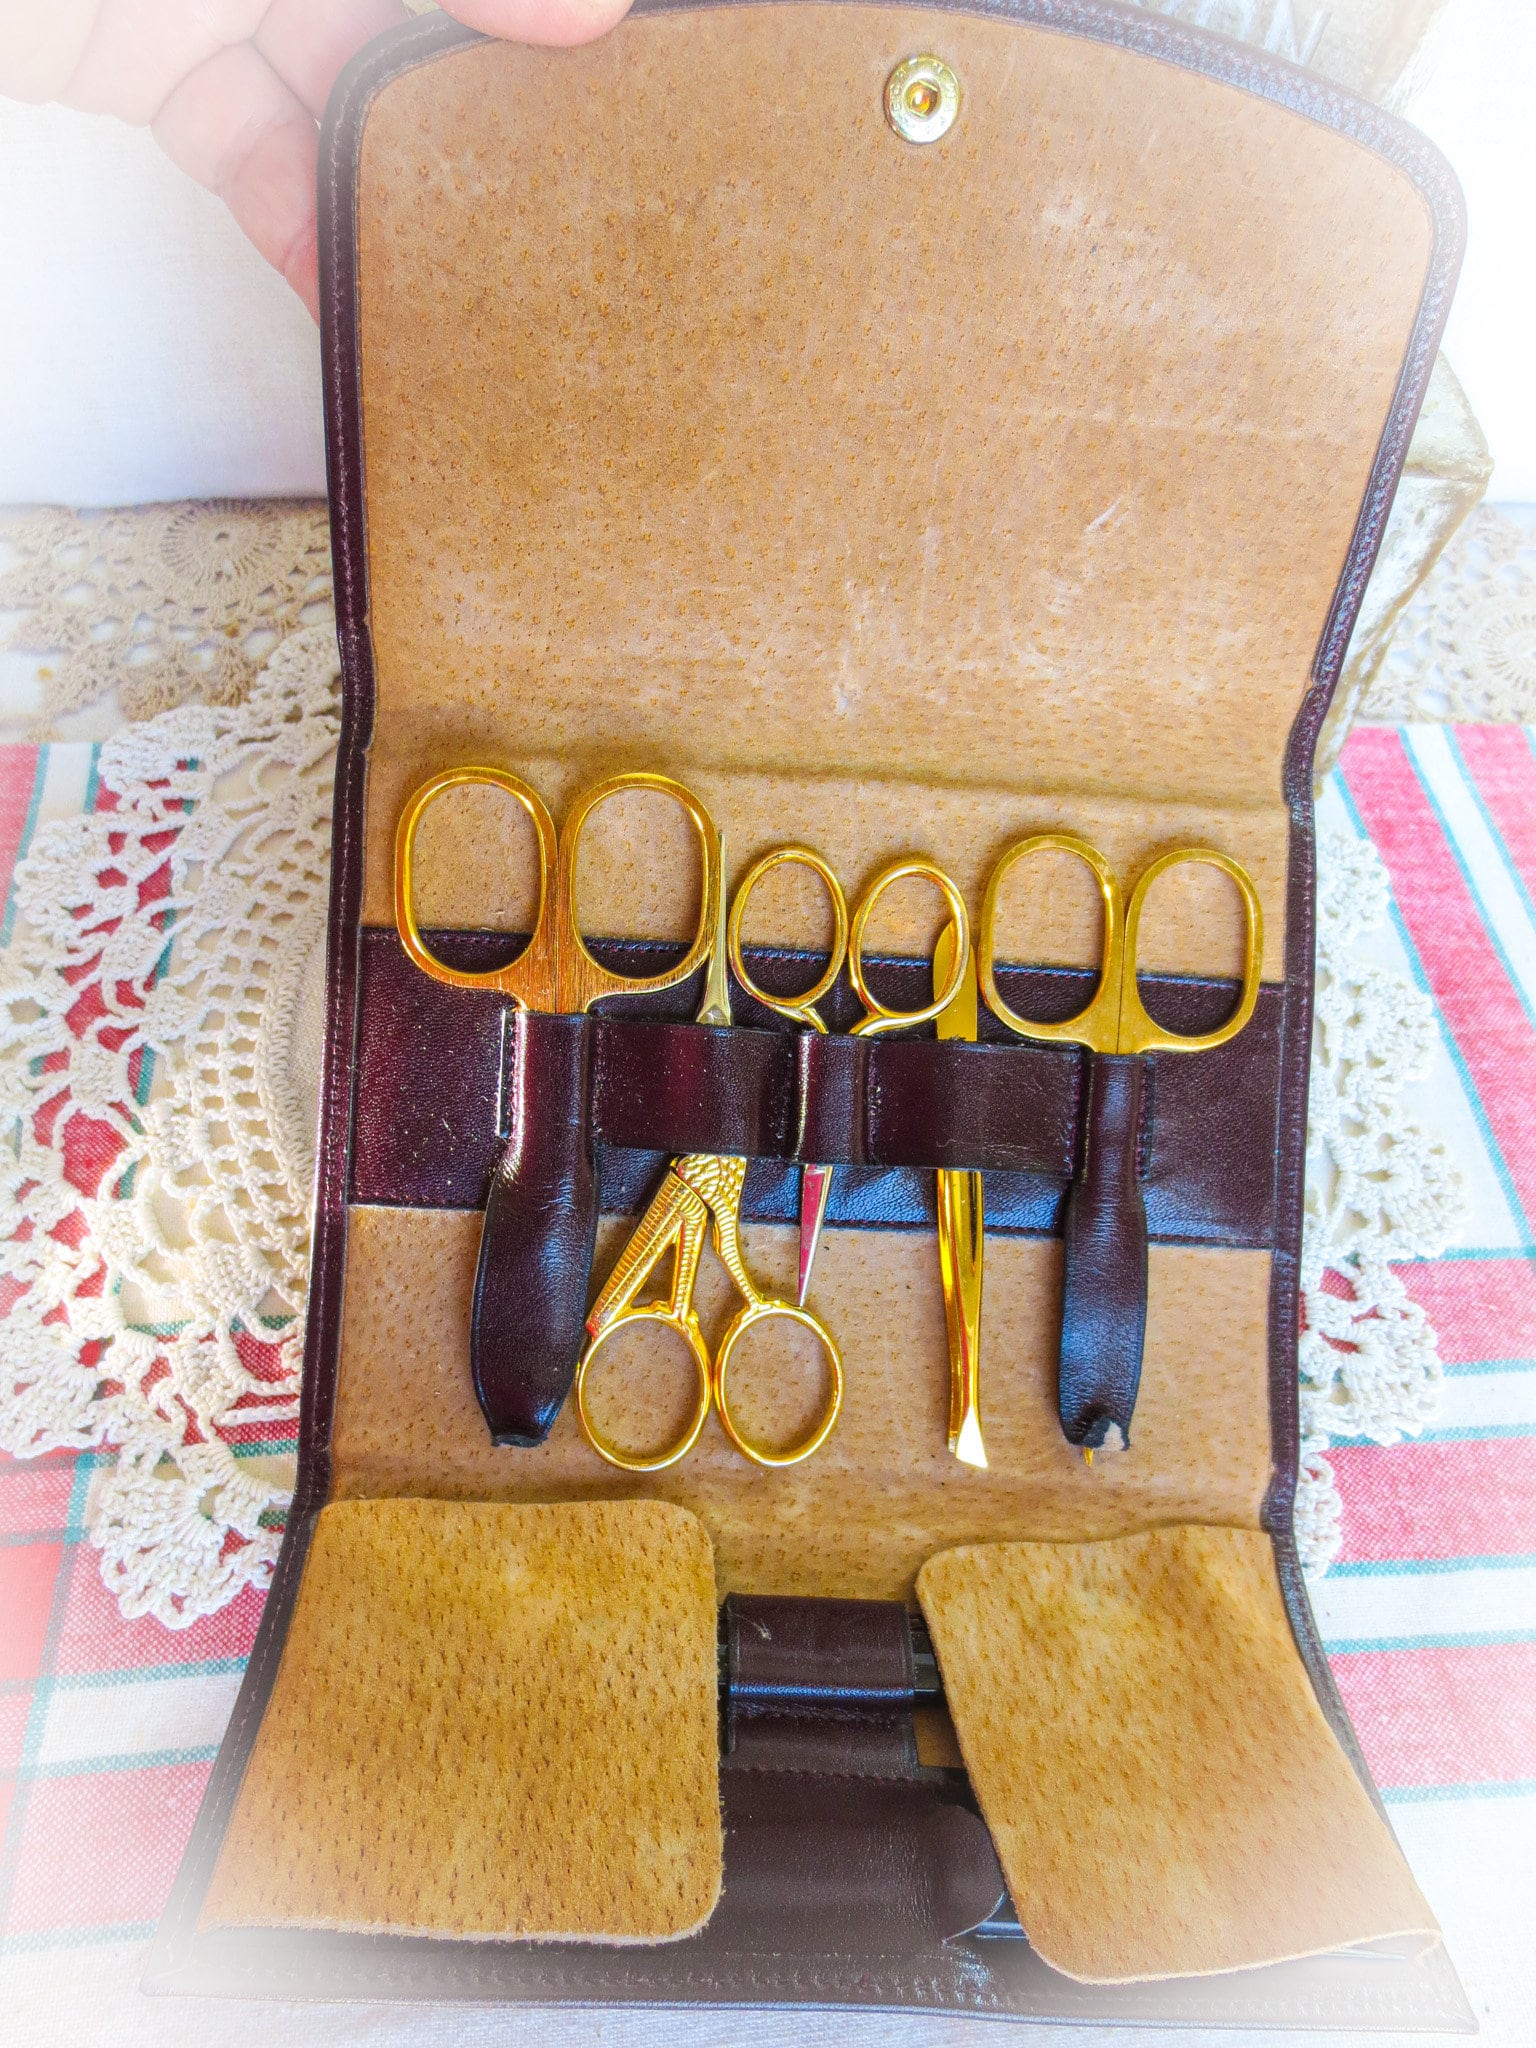 Vintage Small Scissors, Vintage Sewing Scissors, Small Vintage Steel  Crafting Scissors, Collectable Vintage Sewing Tools 